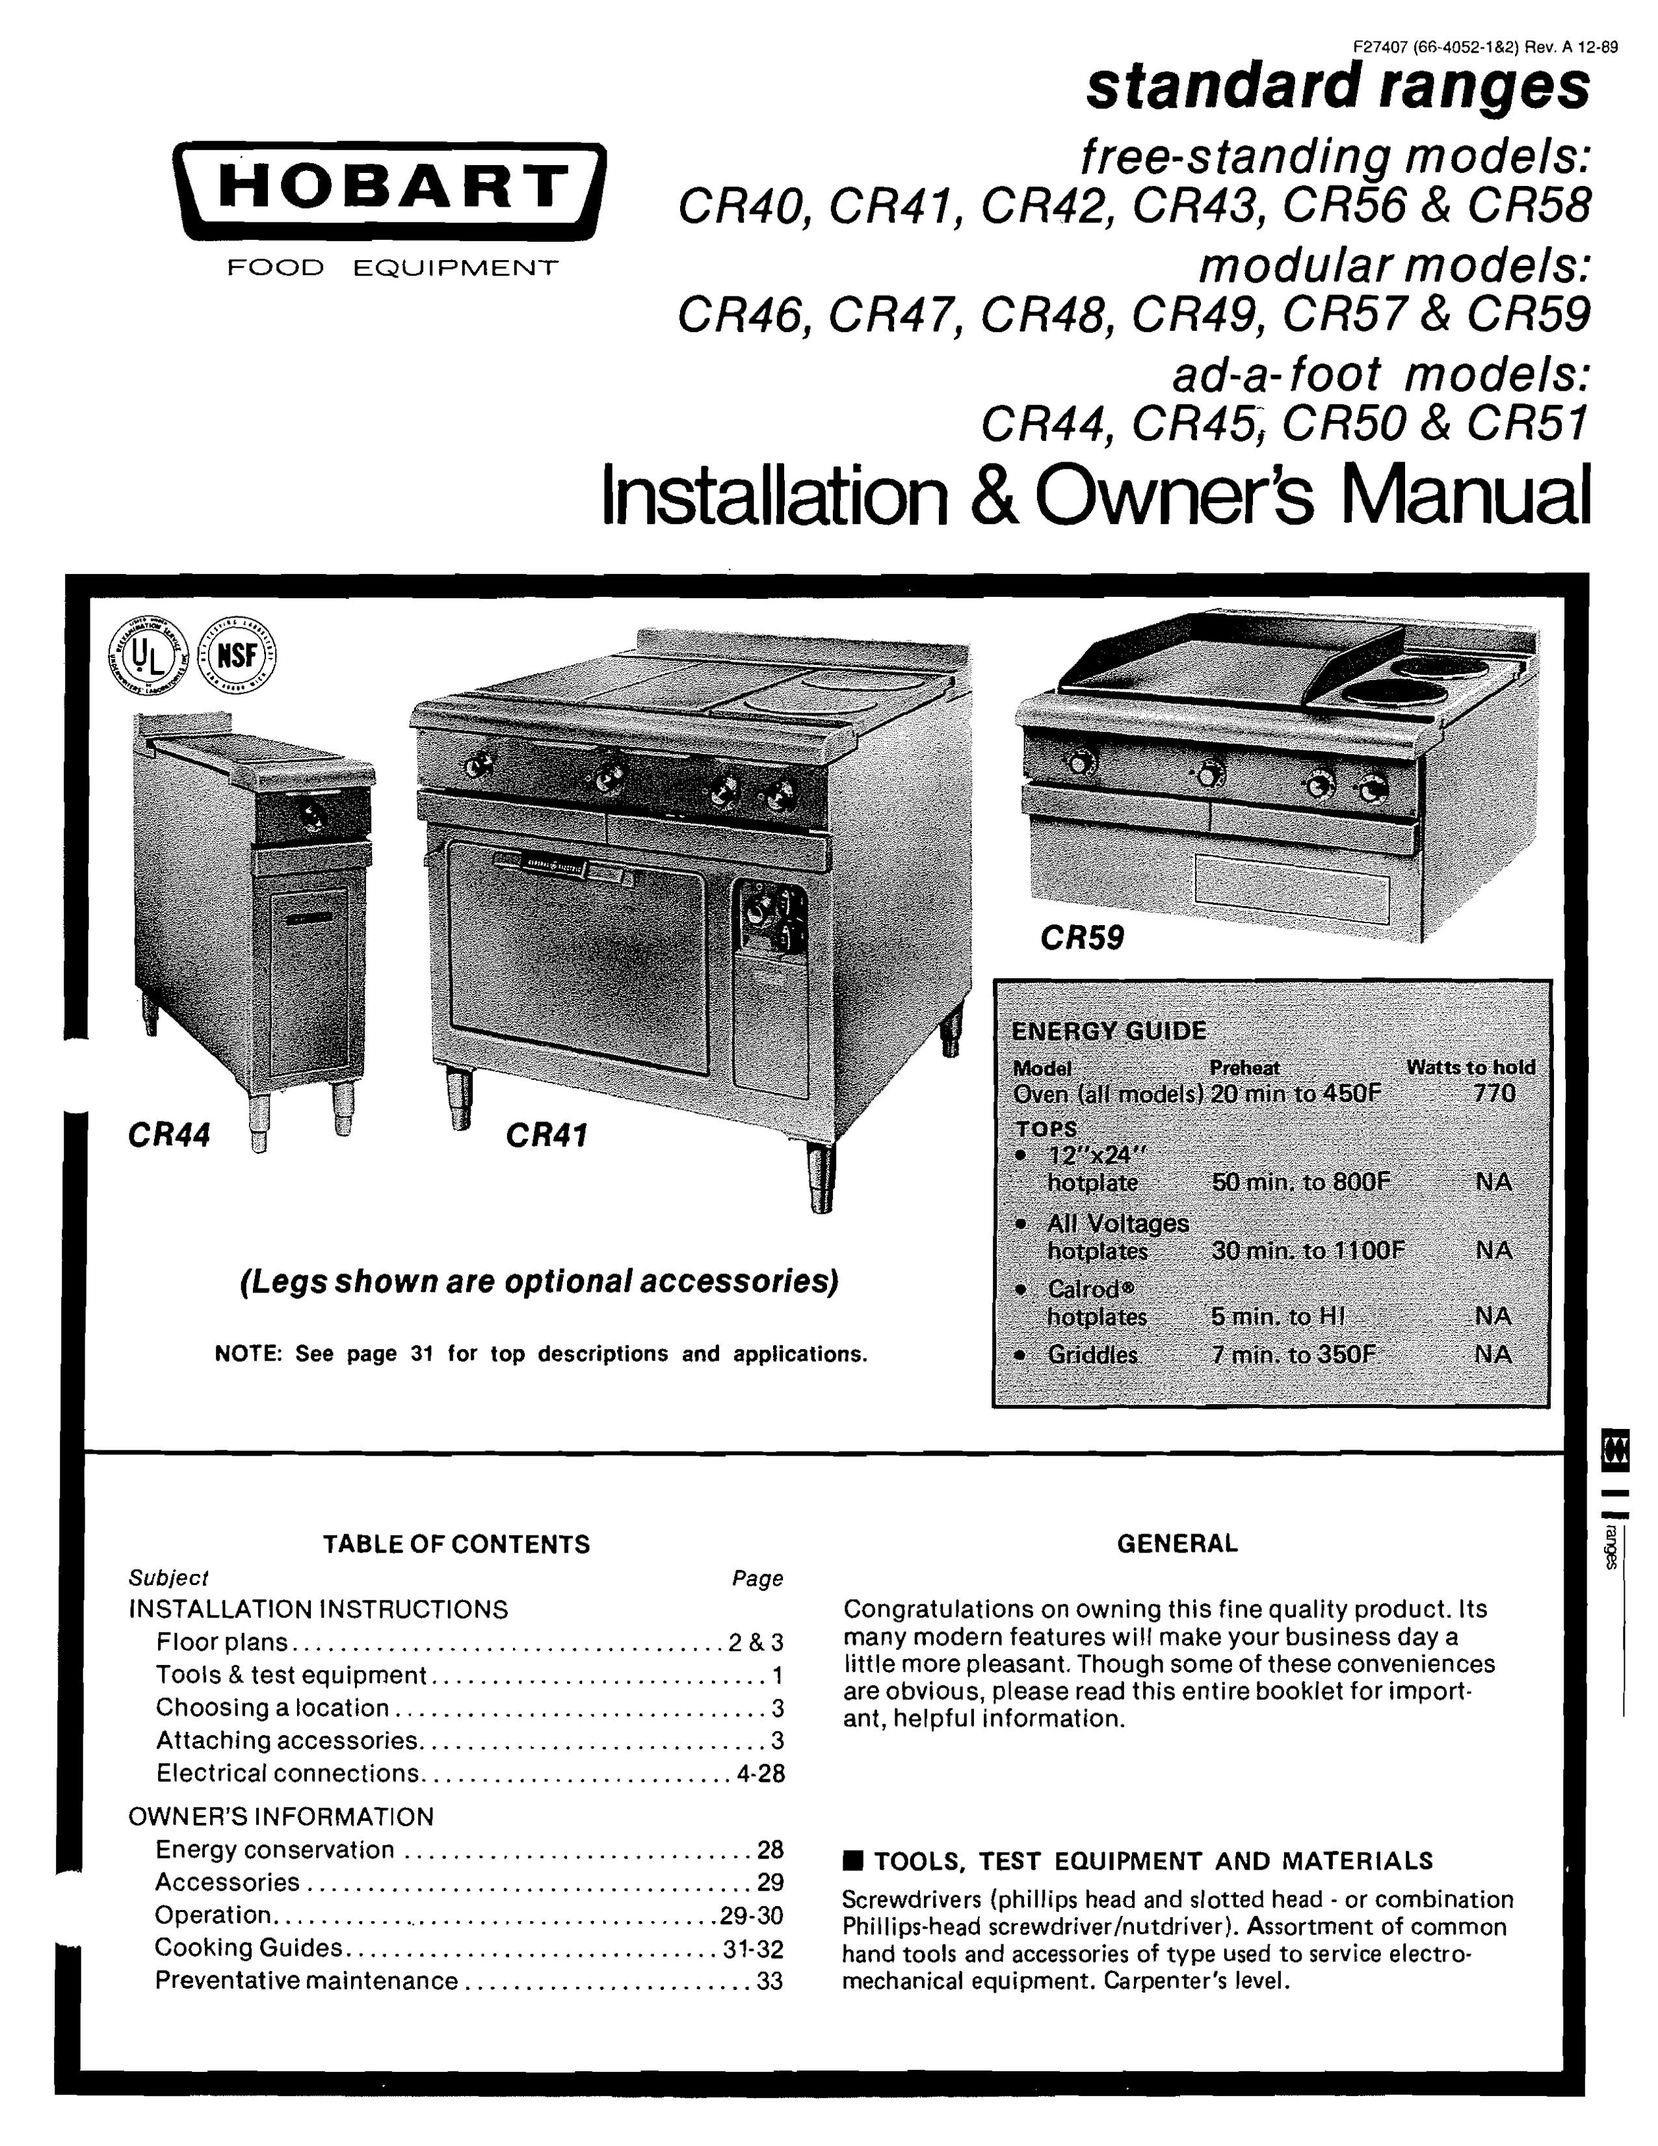 Hobart Modular models CR-46 Double Oven User Manual